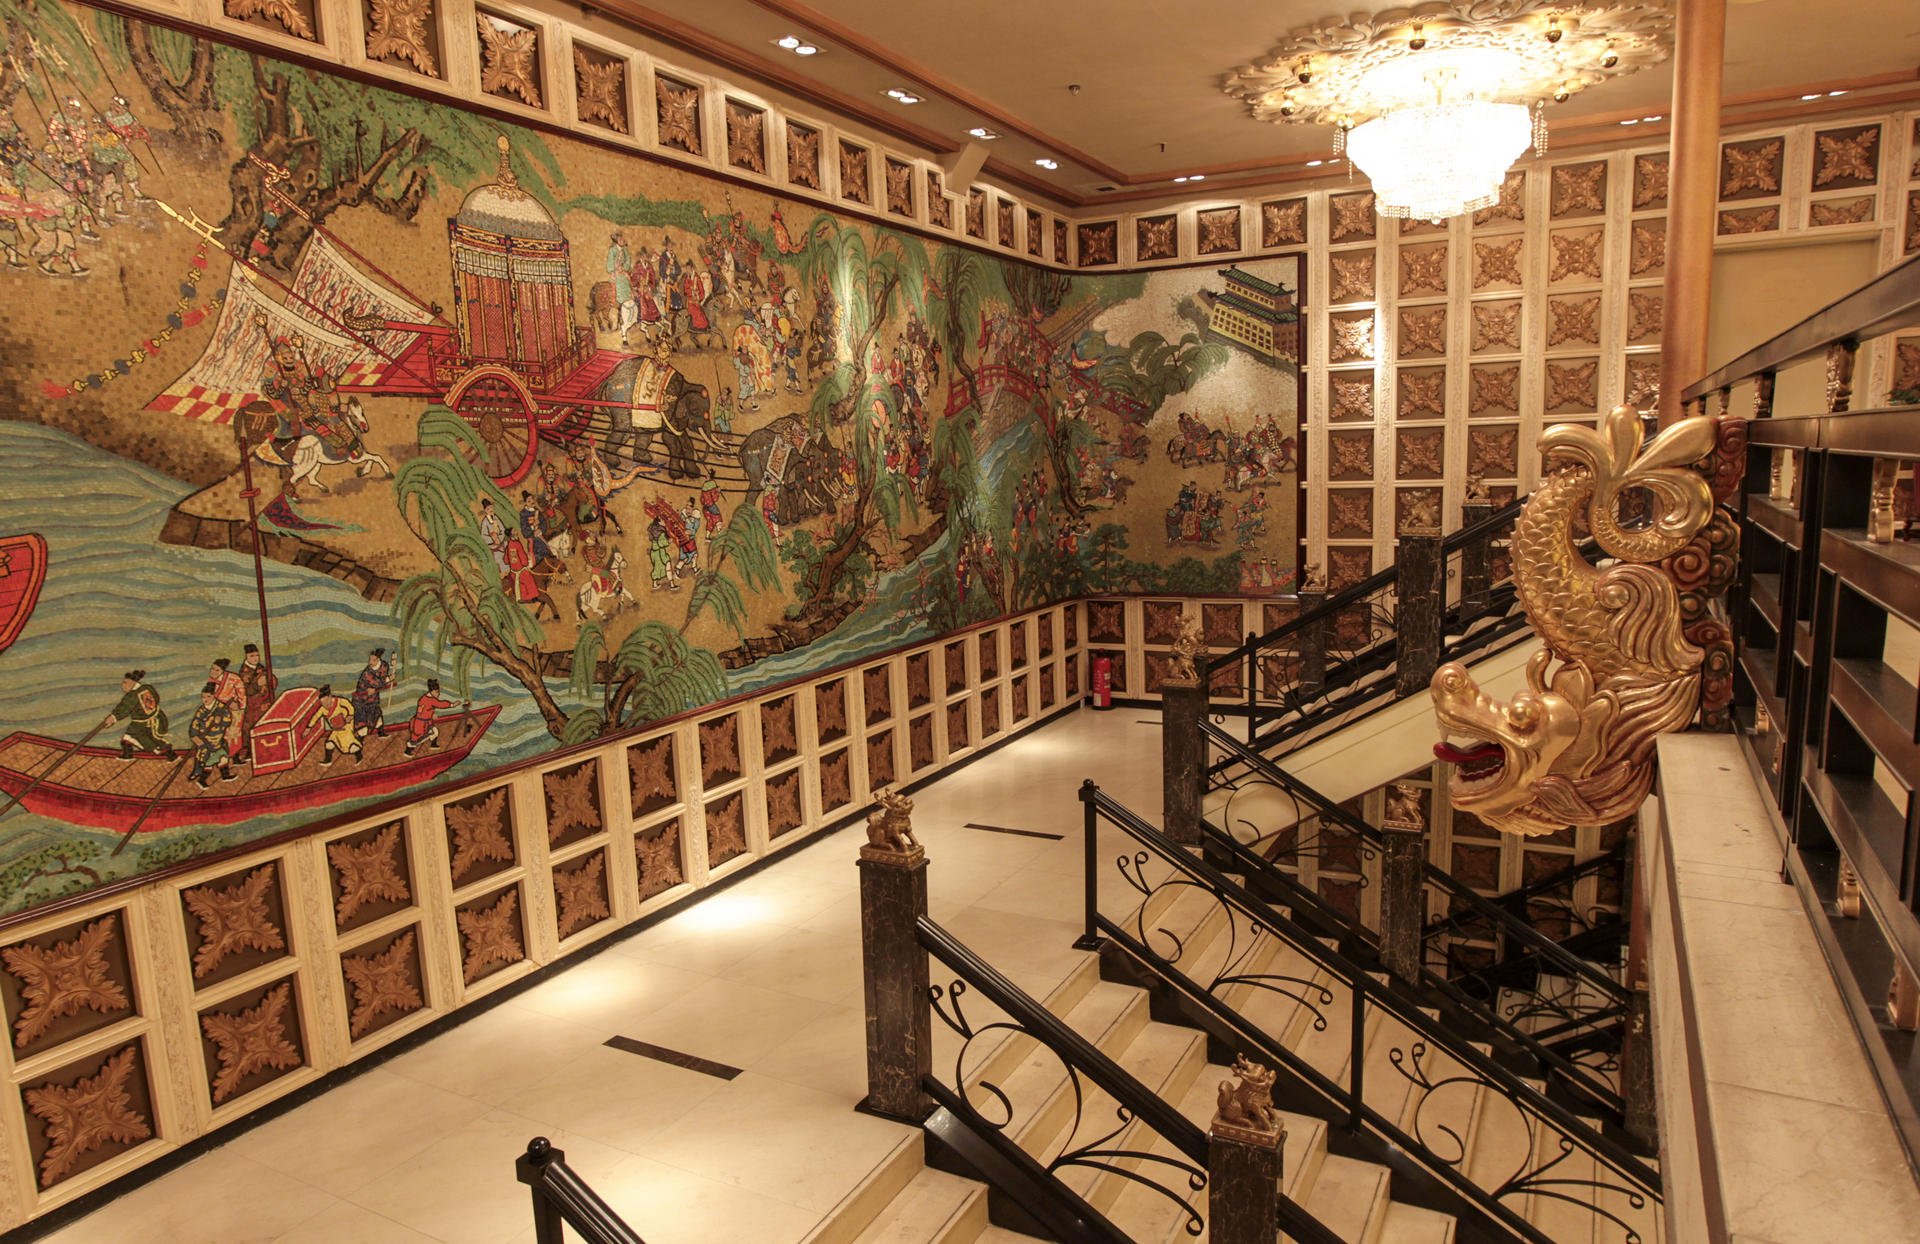 The interior of Jumbo Kingdom. Photos: Bruce Yan